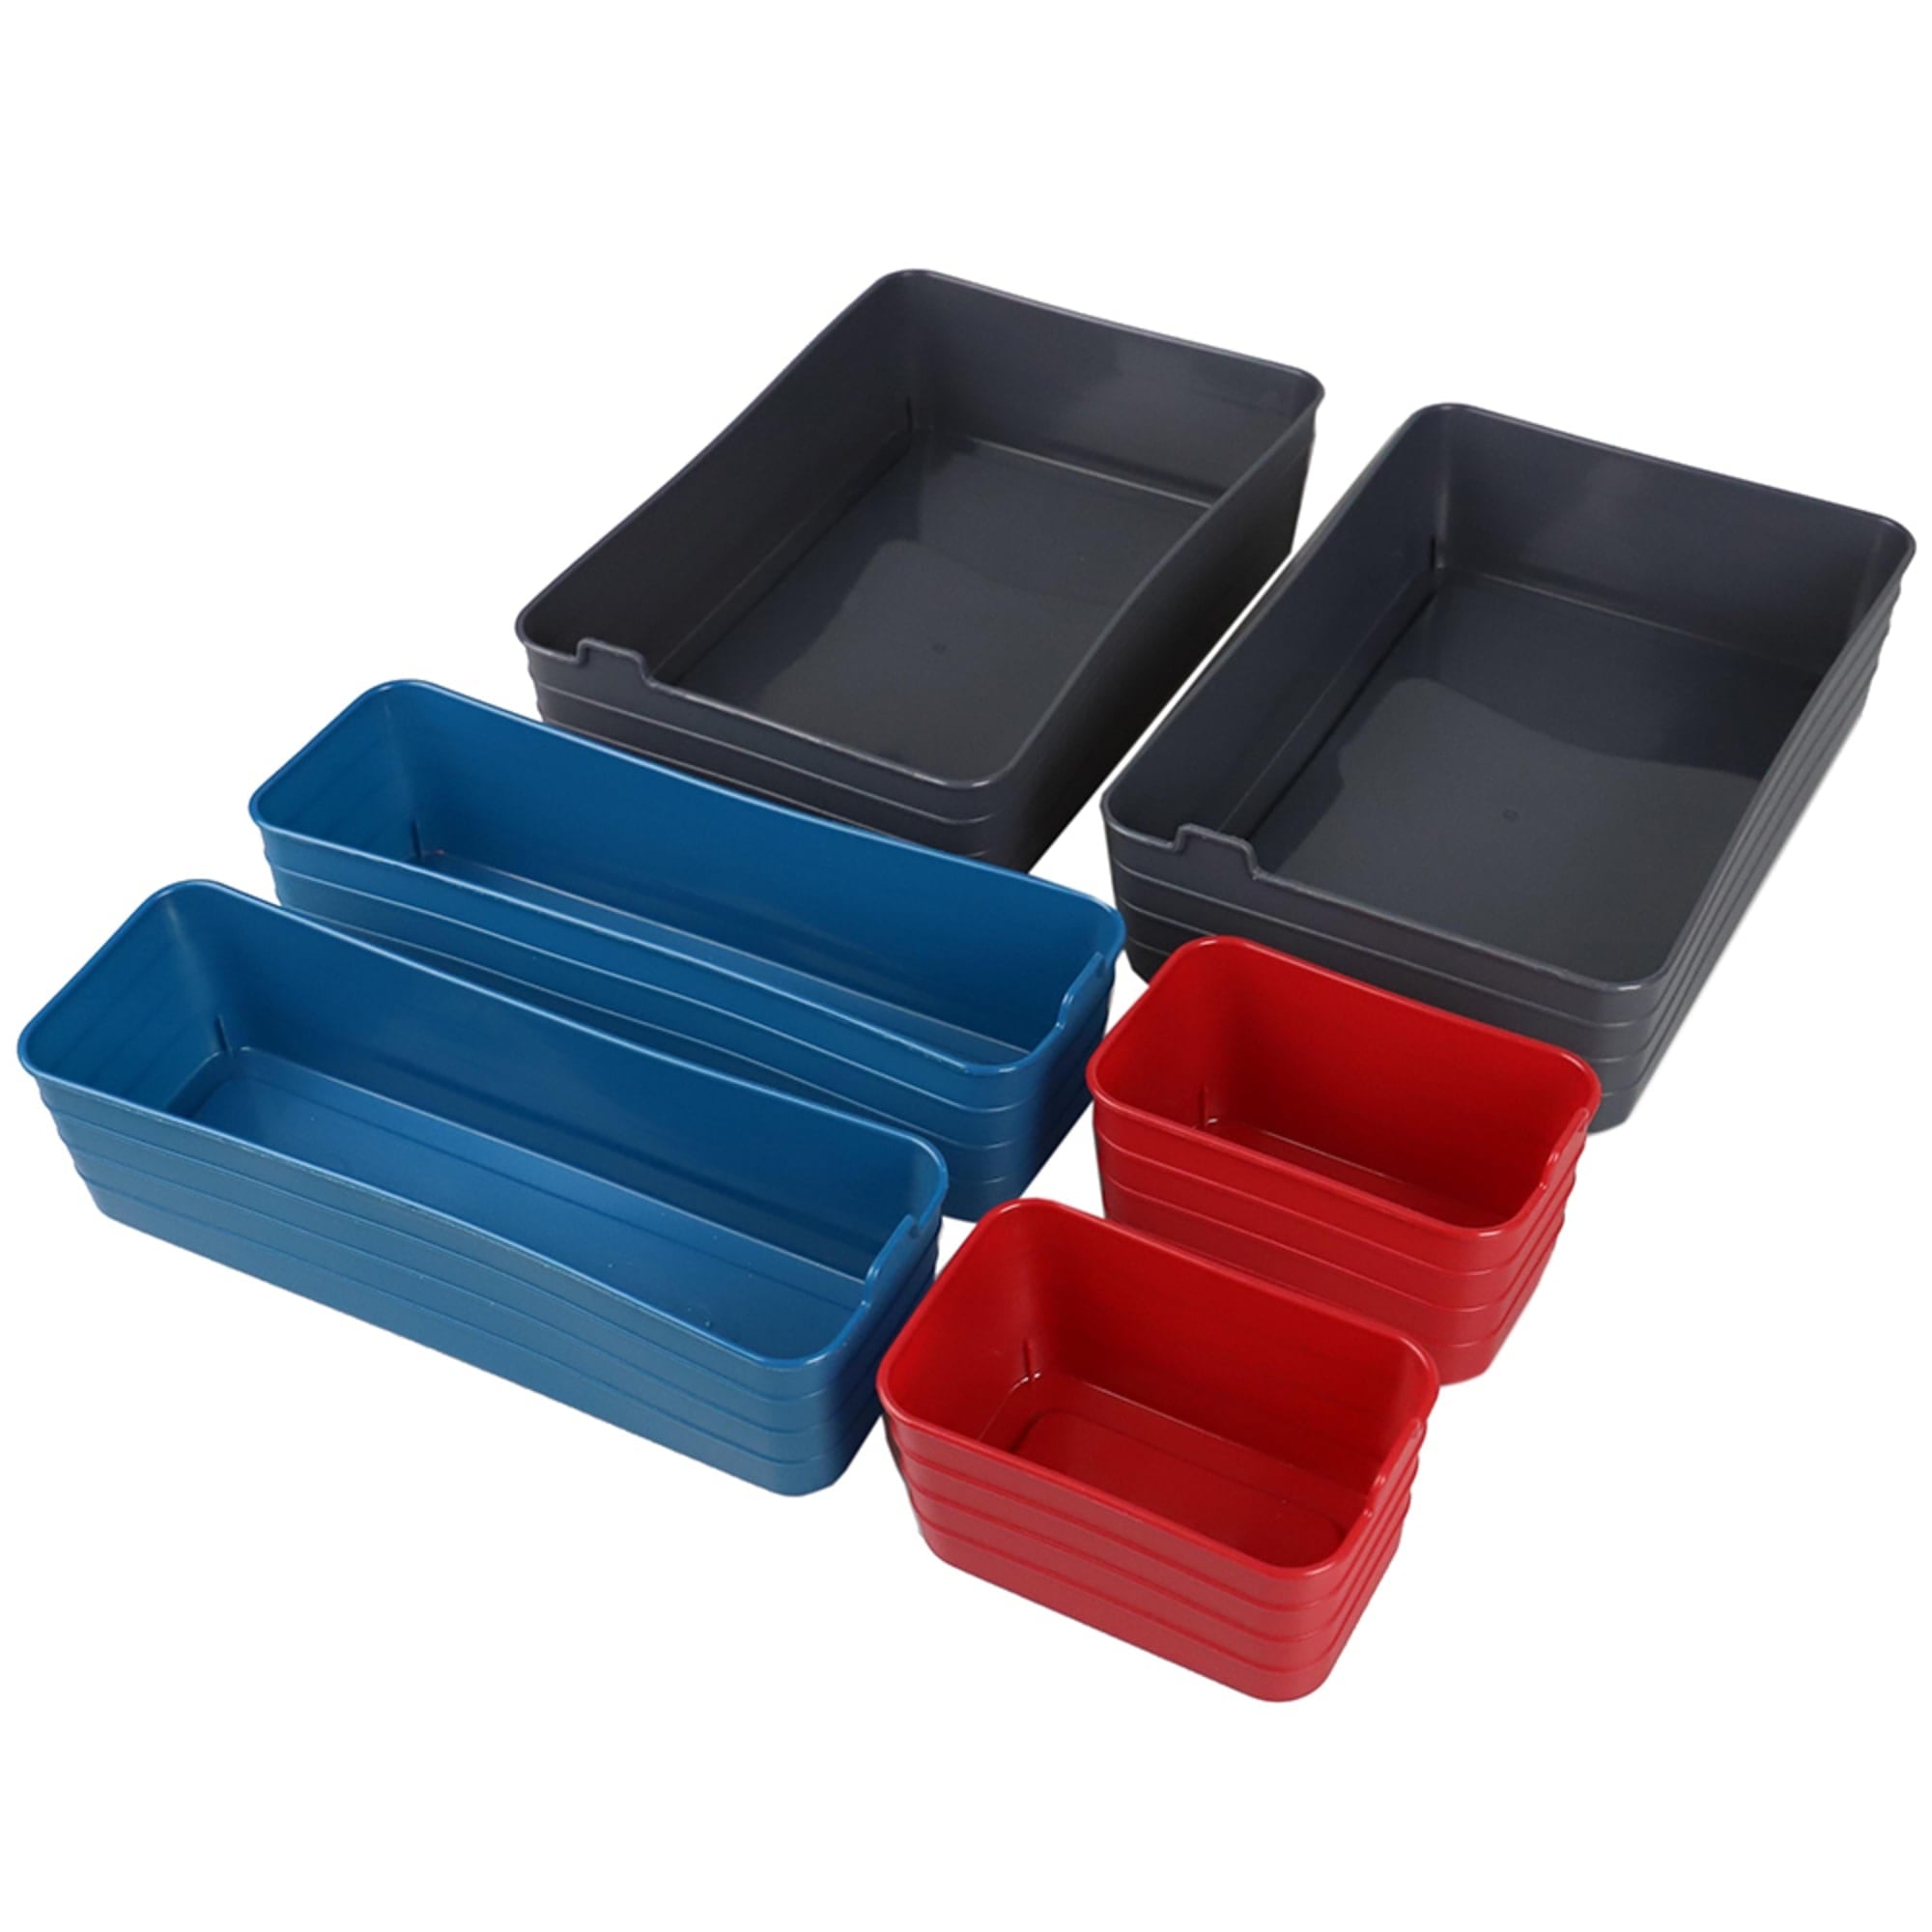 Home Basics Flexible Plastic Drawer Organizer Set, (Pack of 6), Multi-color $5.00 EACH, CASE PACK OF 12